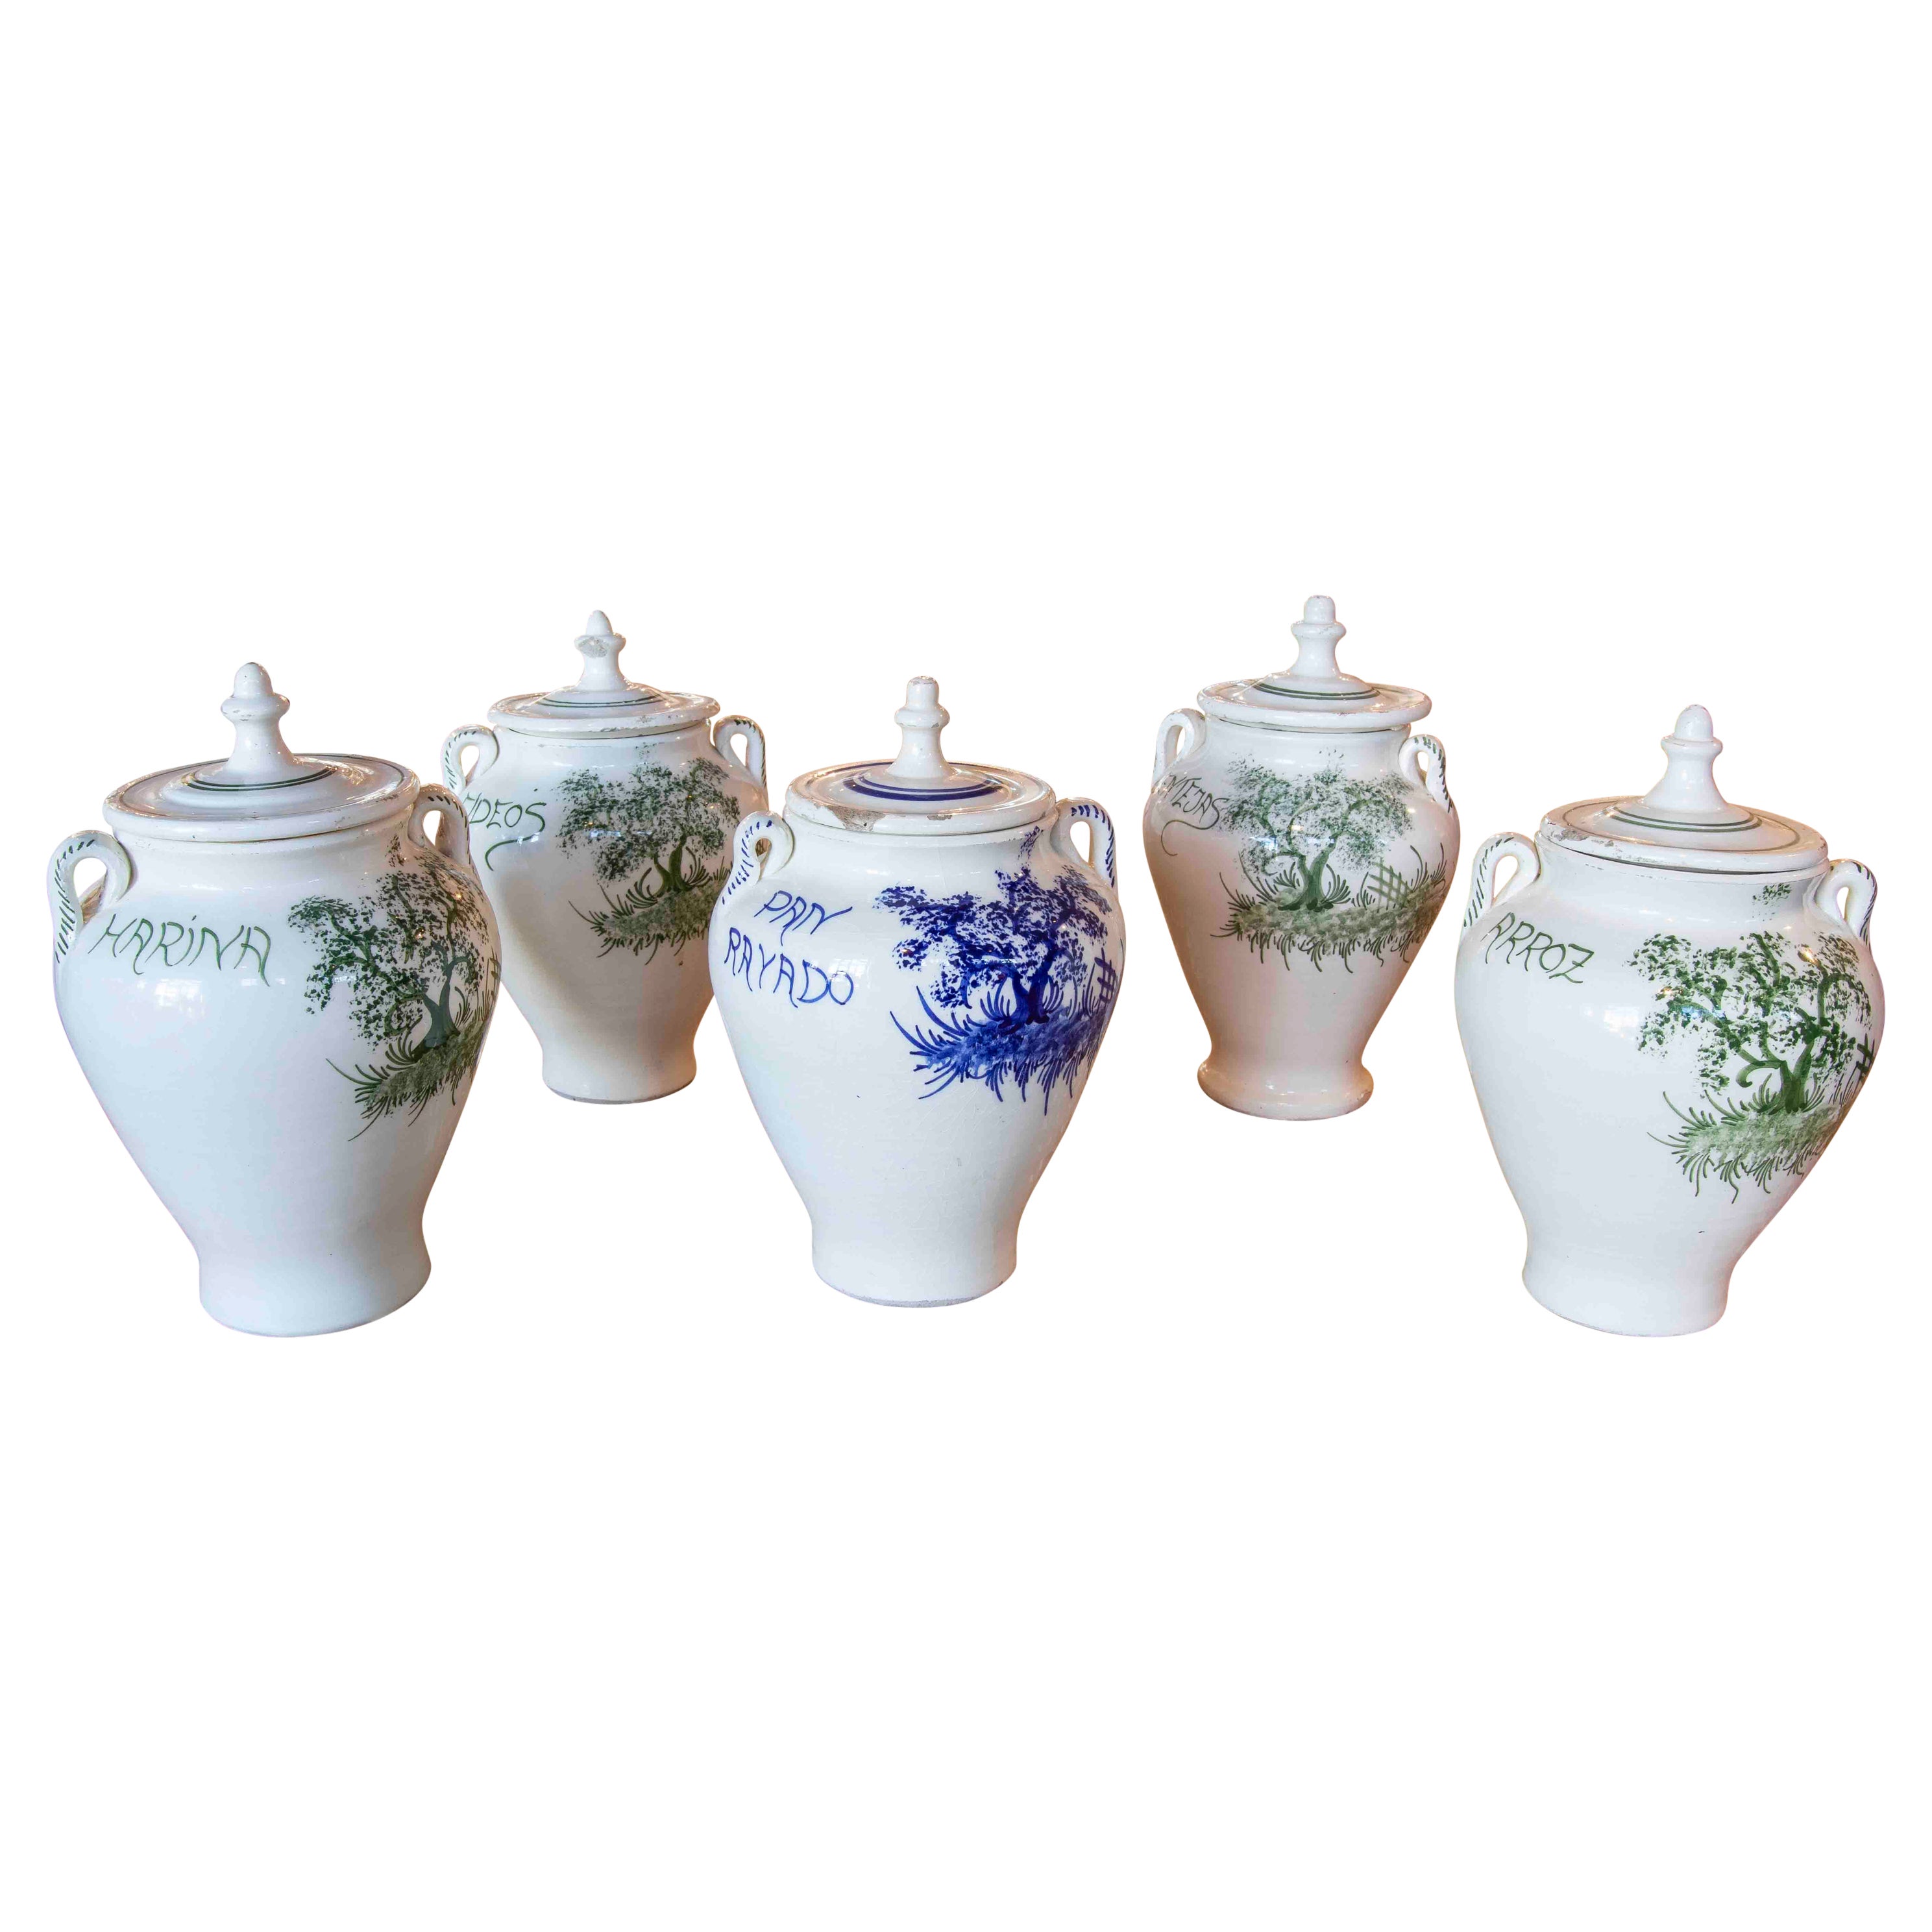 Set of Five Glazed Ceramic Food Jars with Lids for Cooking